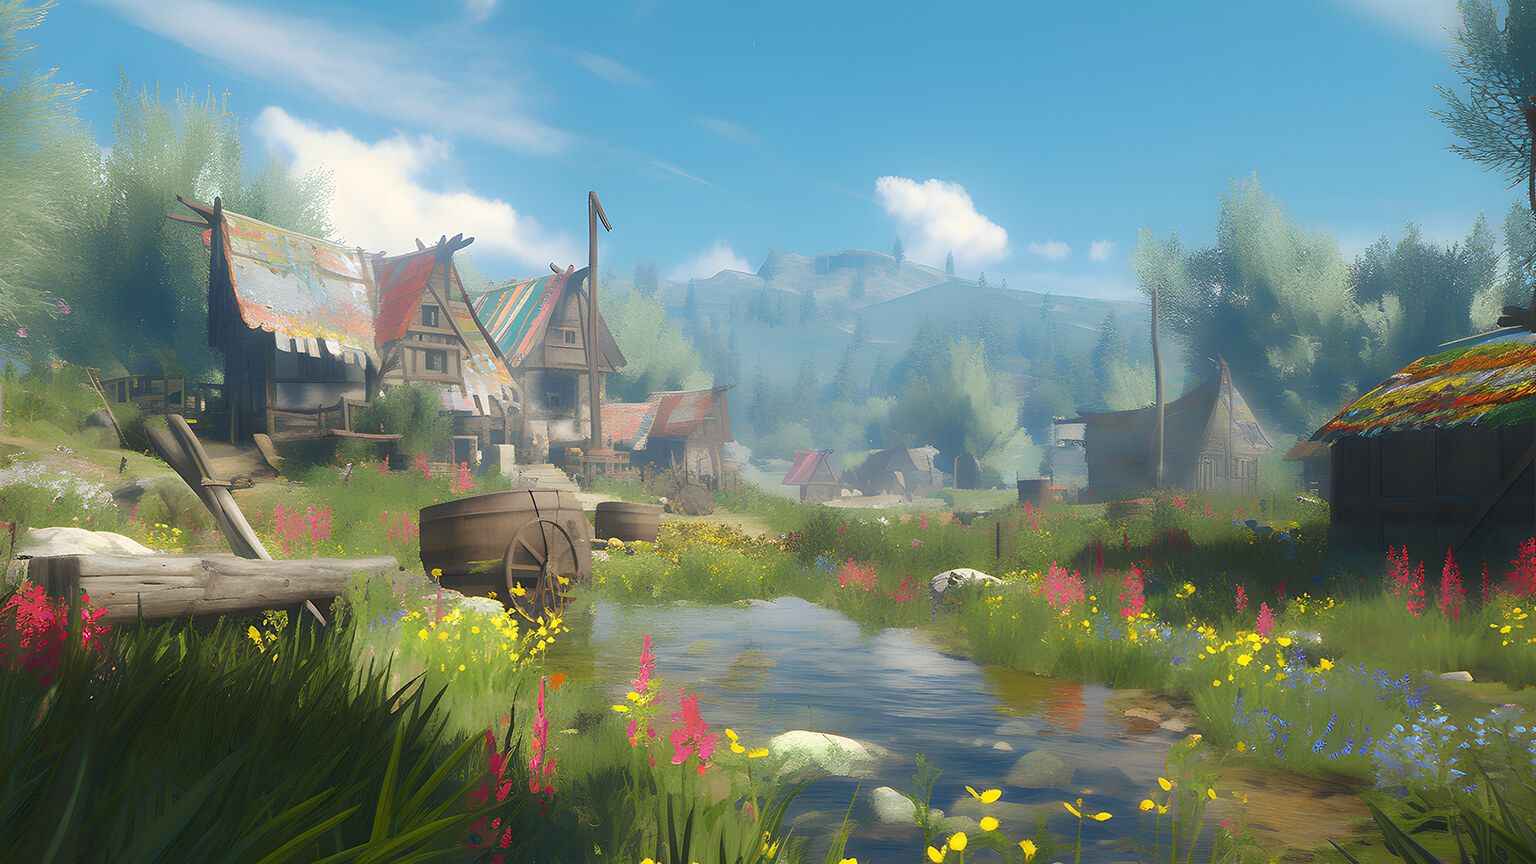 Witcher Aesthetic Village Landscape Desktop Wallpaper in 4K